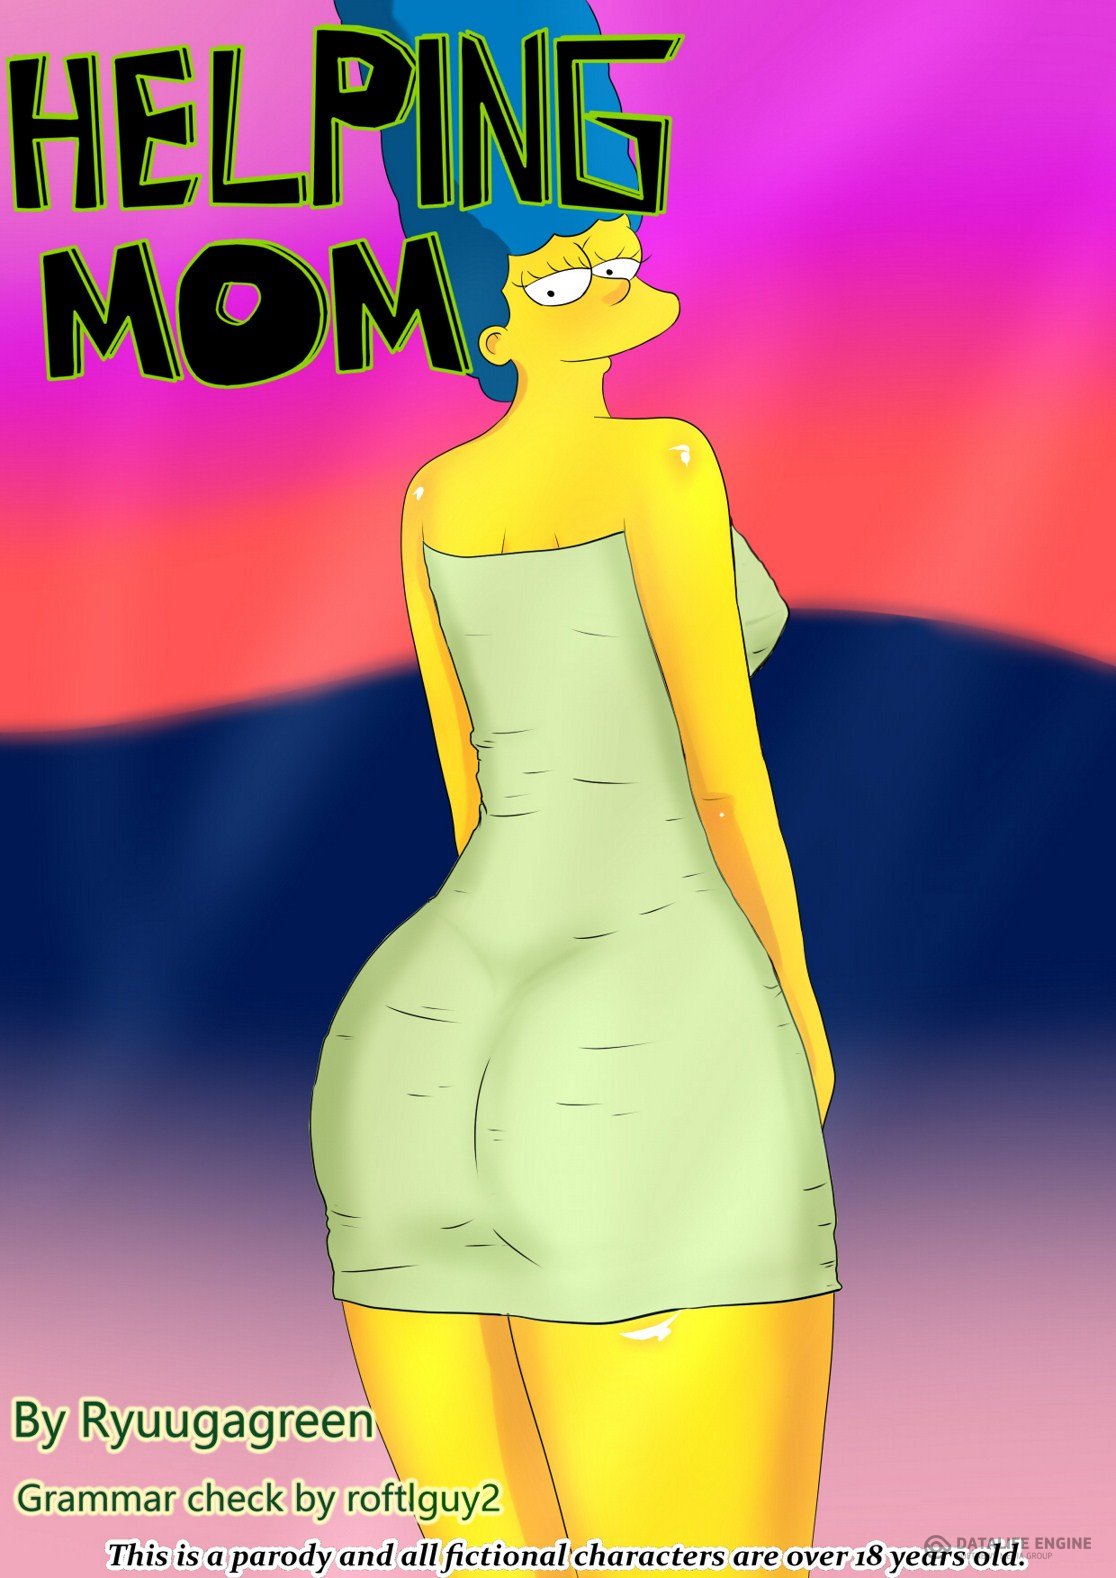 The Simpsons Pron